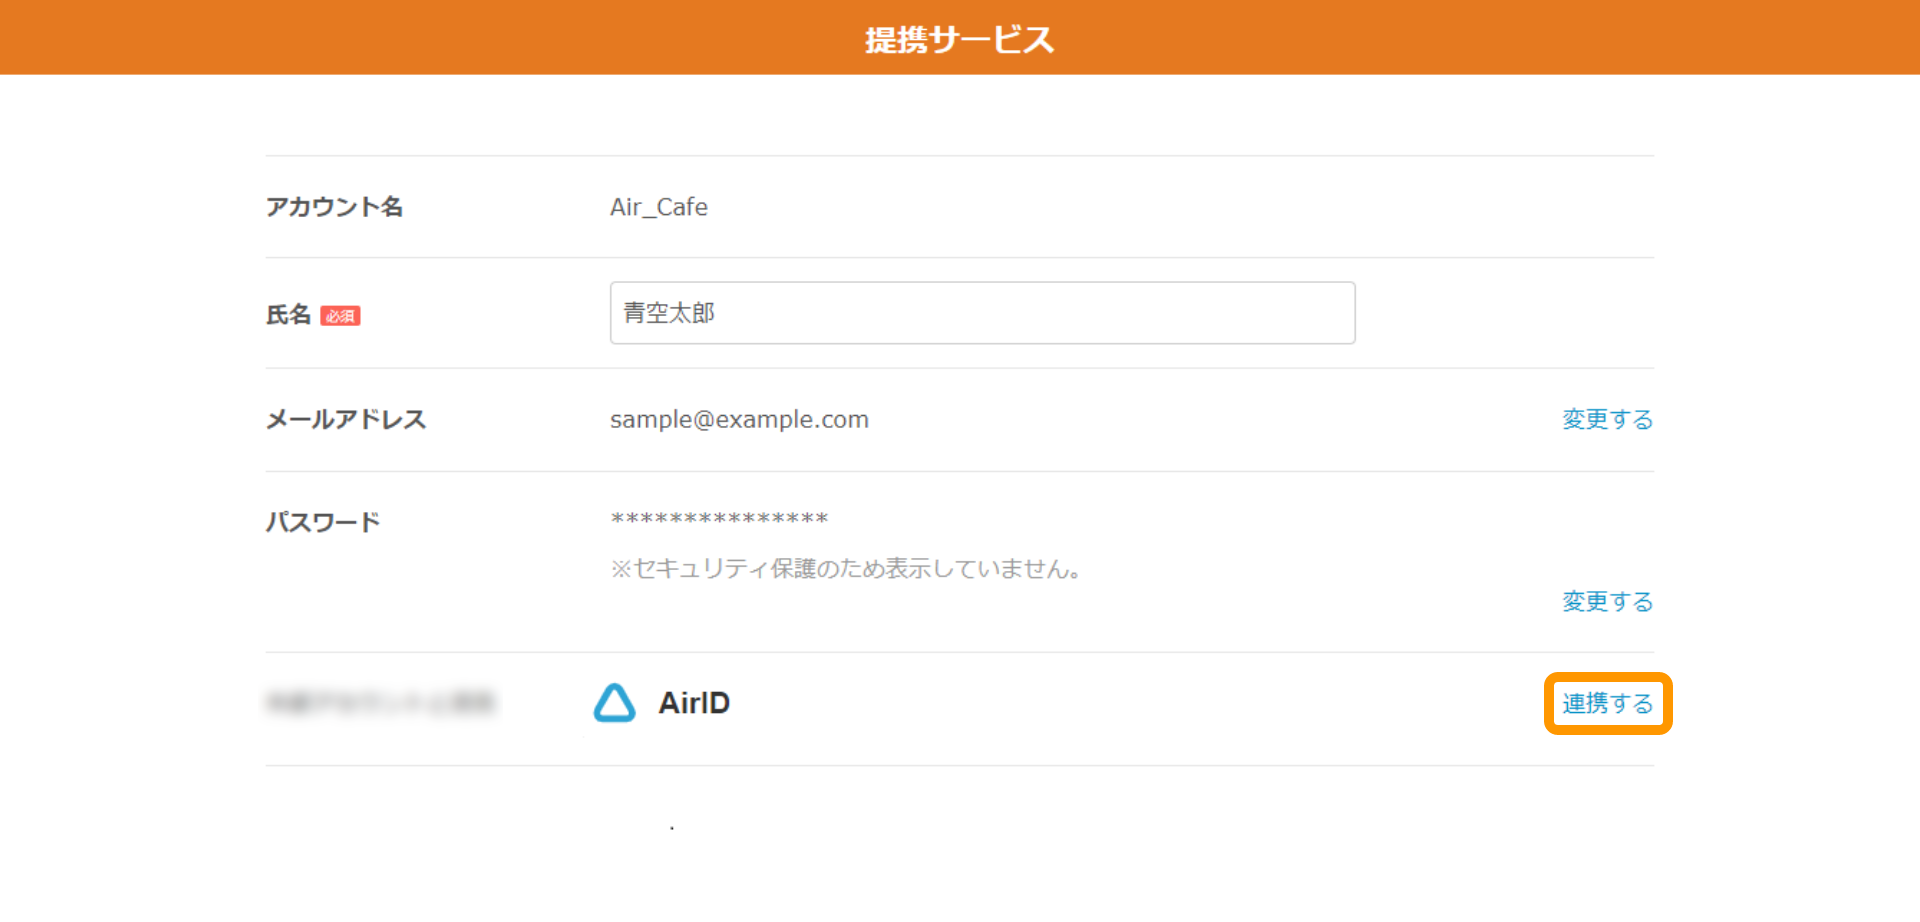 AirID 提携サービスのアカウント設定画面